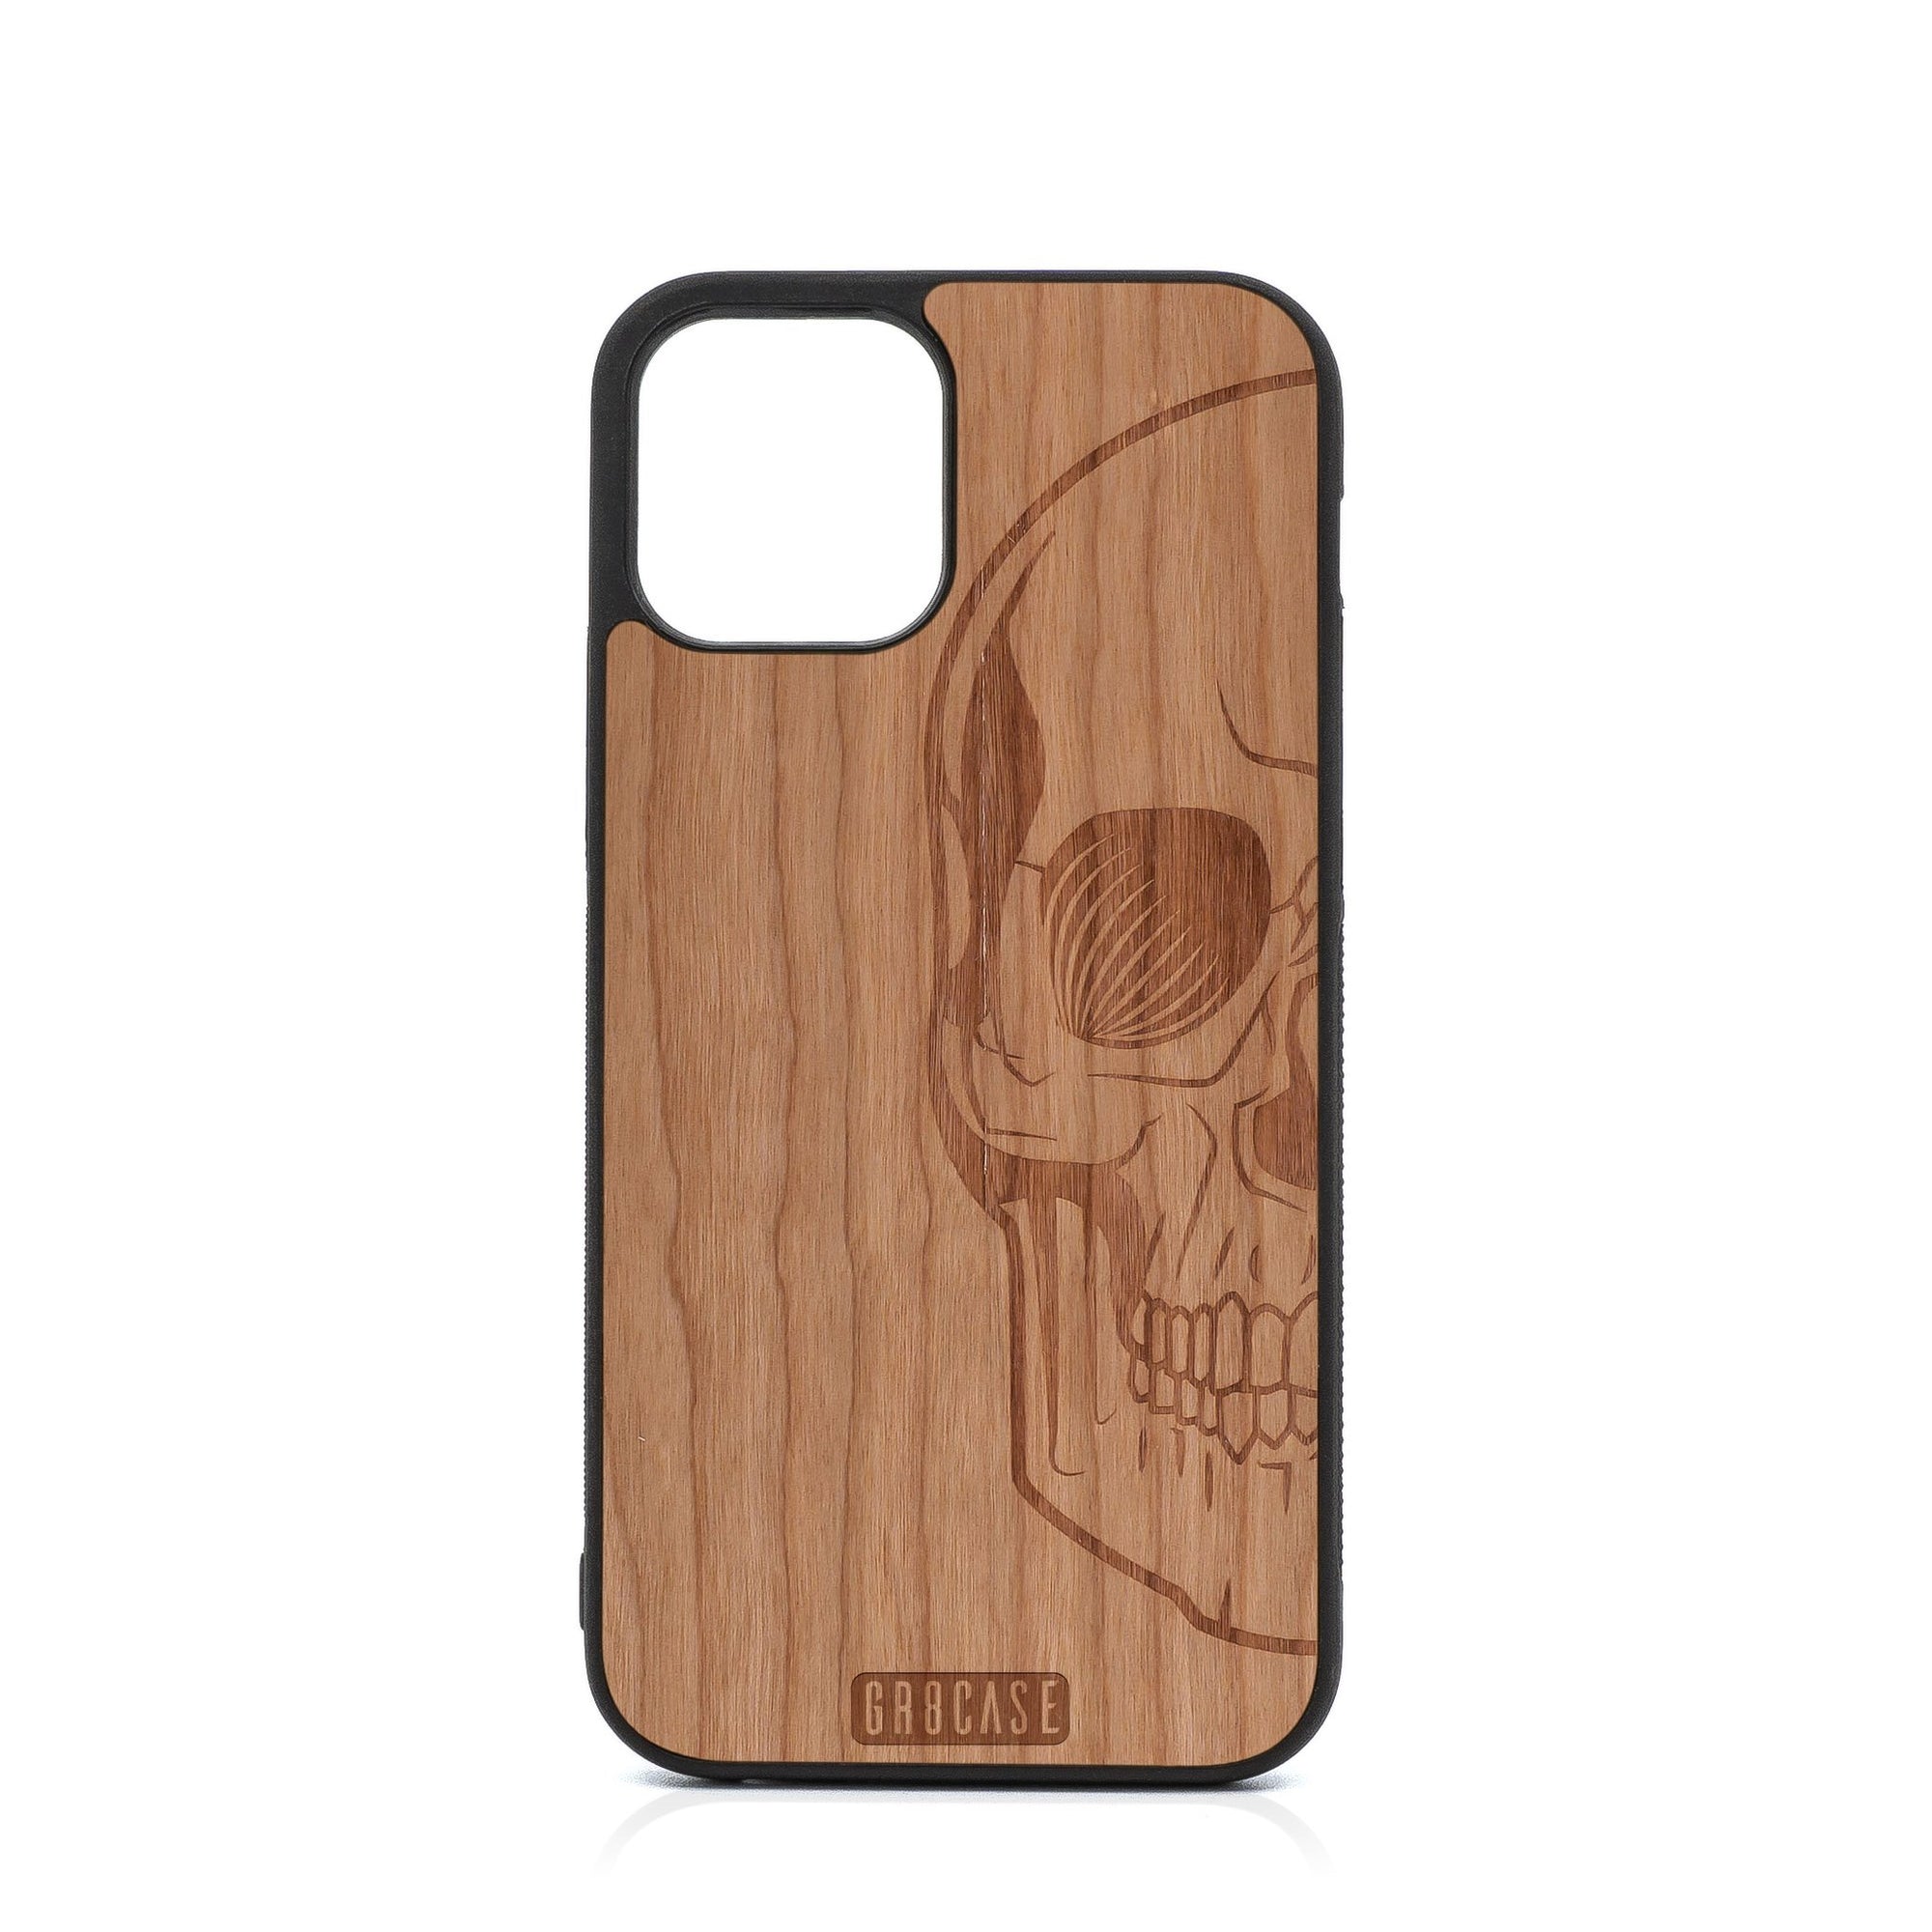 Half Skull Design Wood Case For iPhone 12